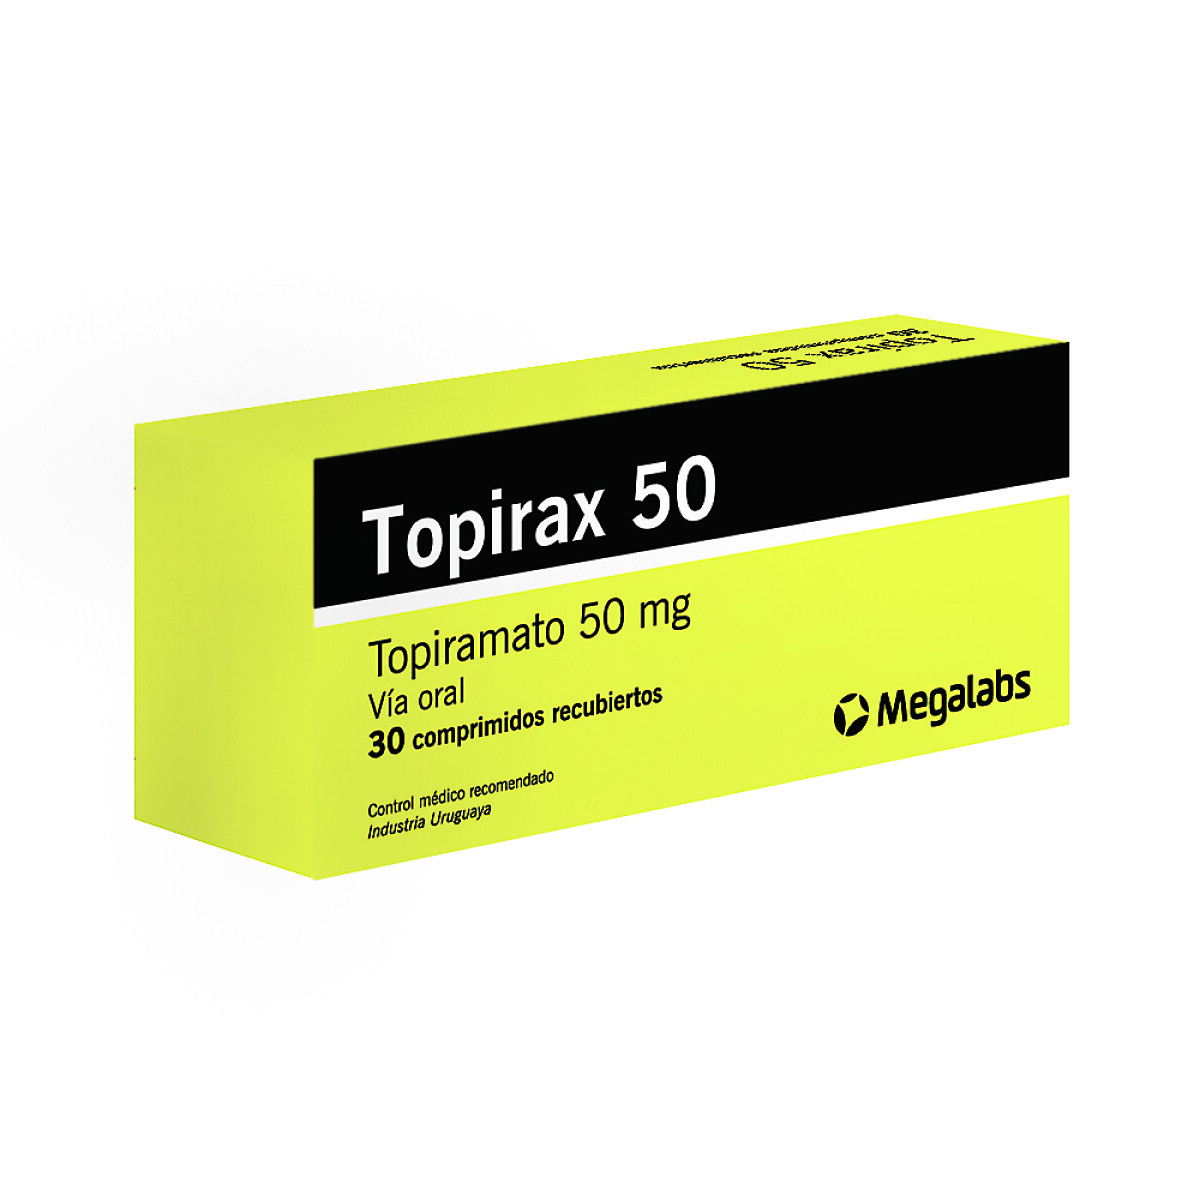 Topirax 50 Mg. 30 Comp. 